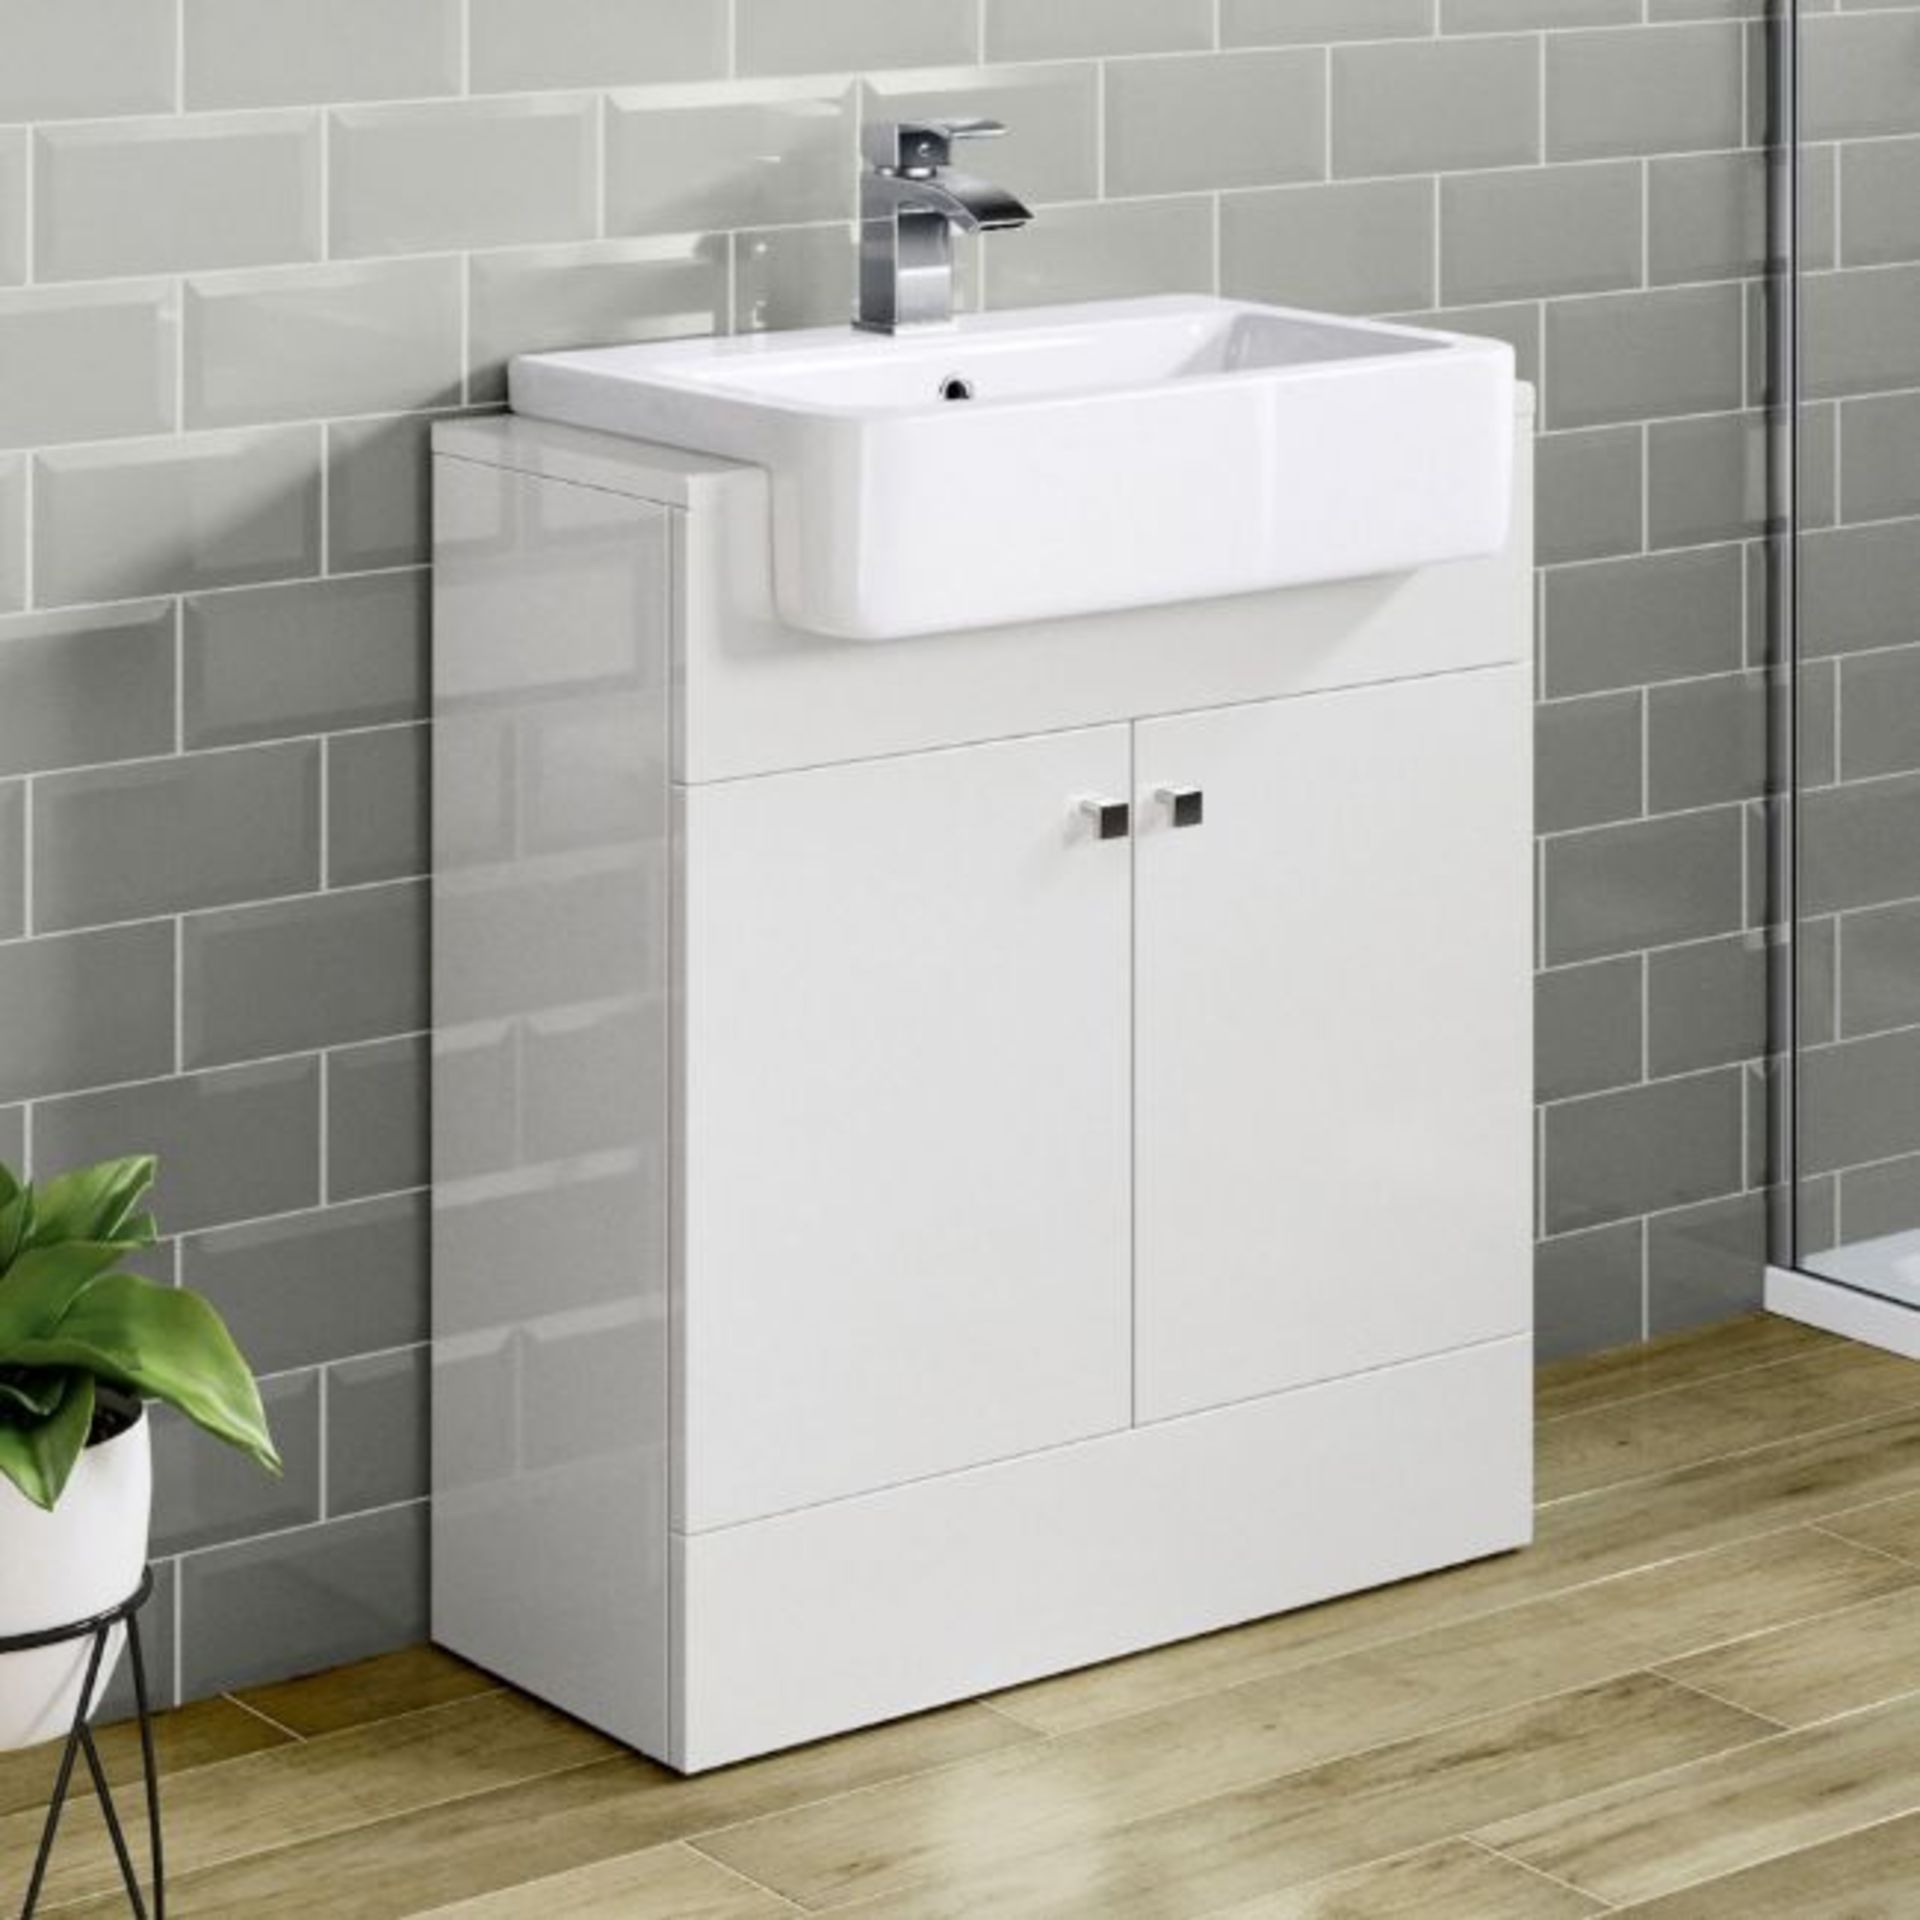 NEW (AA108) 660mm Harper Gloss White Sink Vanity Unit - Floor Standing. Rrp £749.99.Comes C...